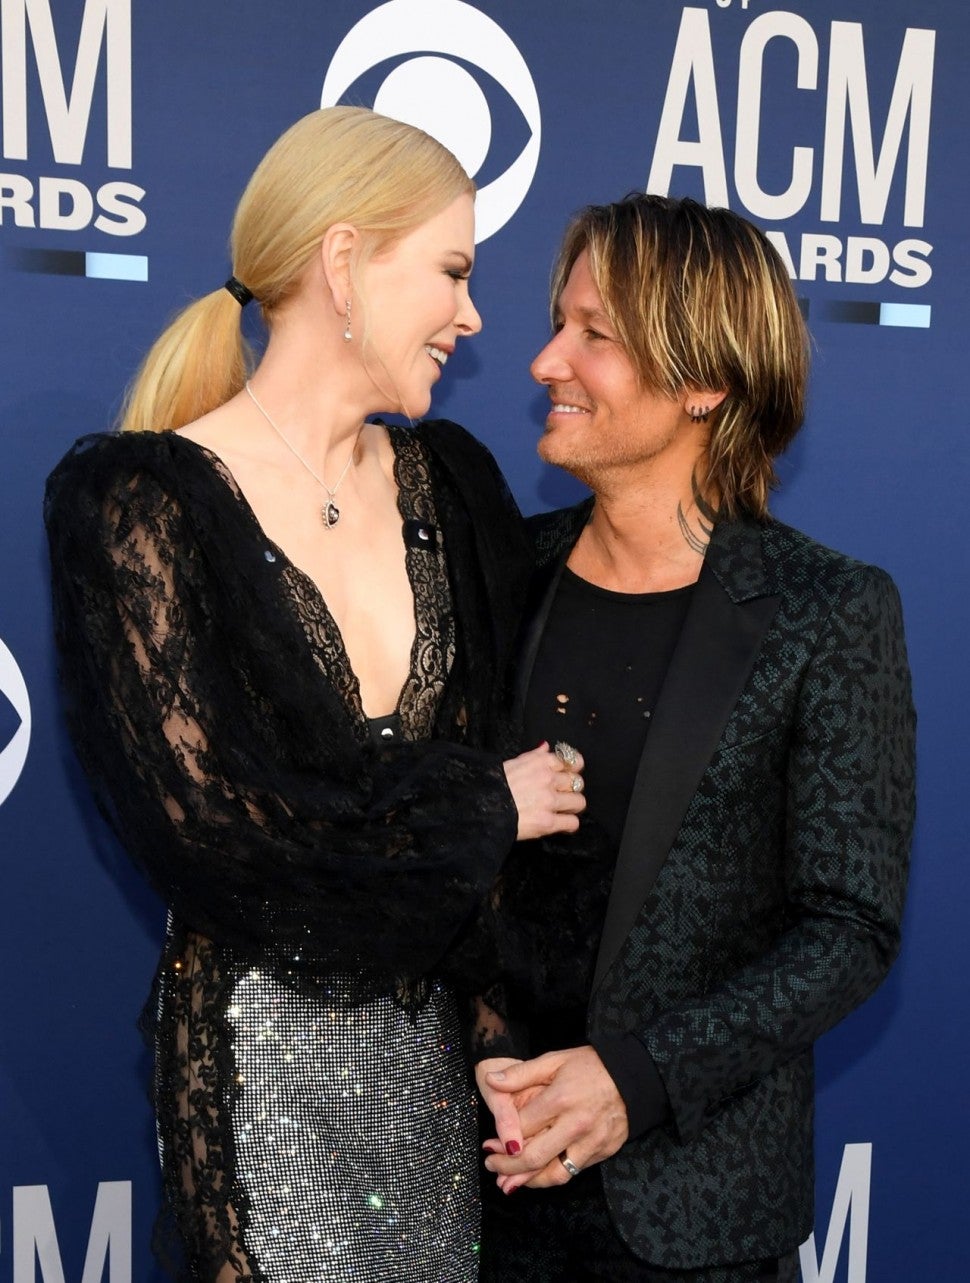 Keith Urban and Nicole Kidman at ACM Awards